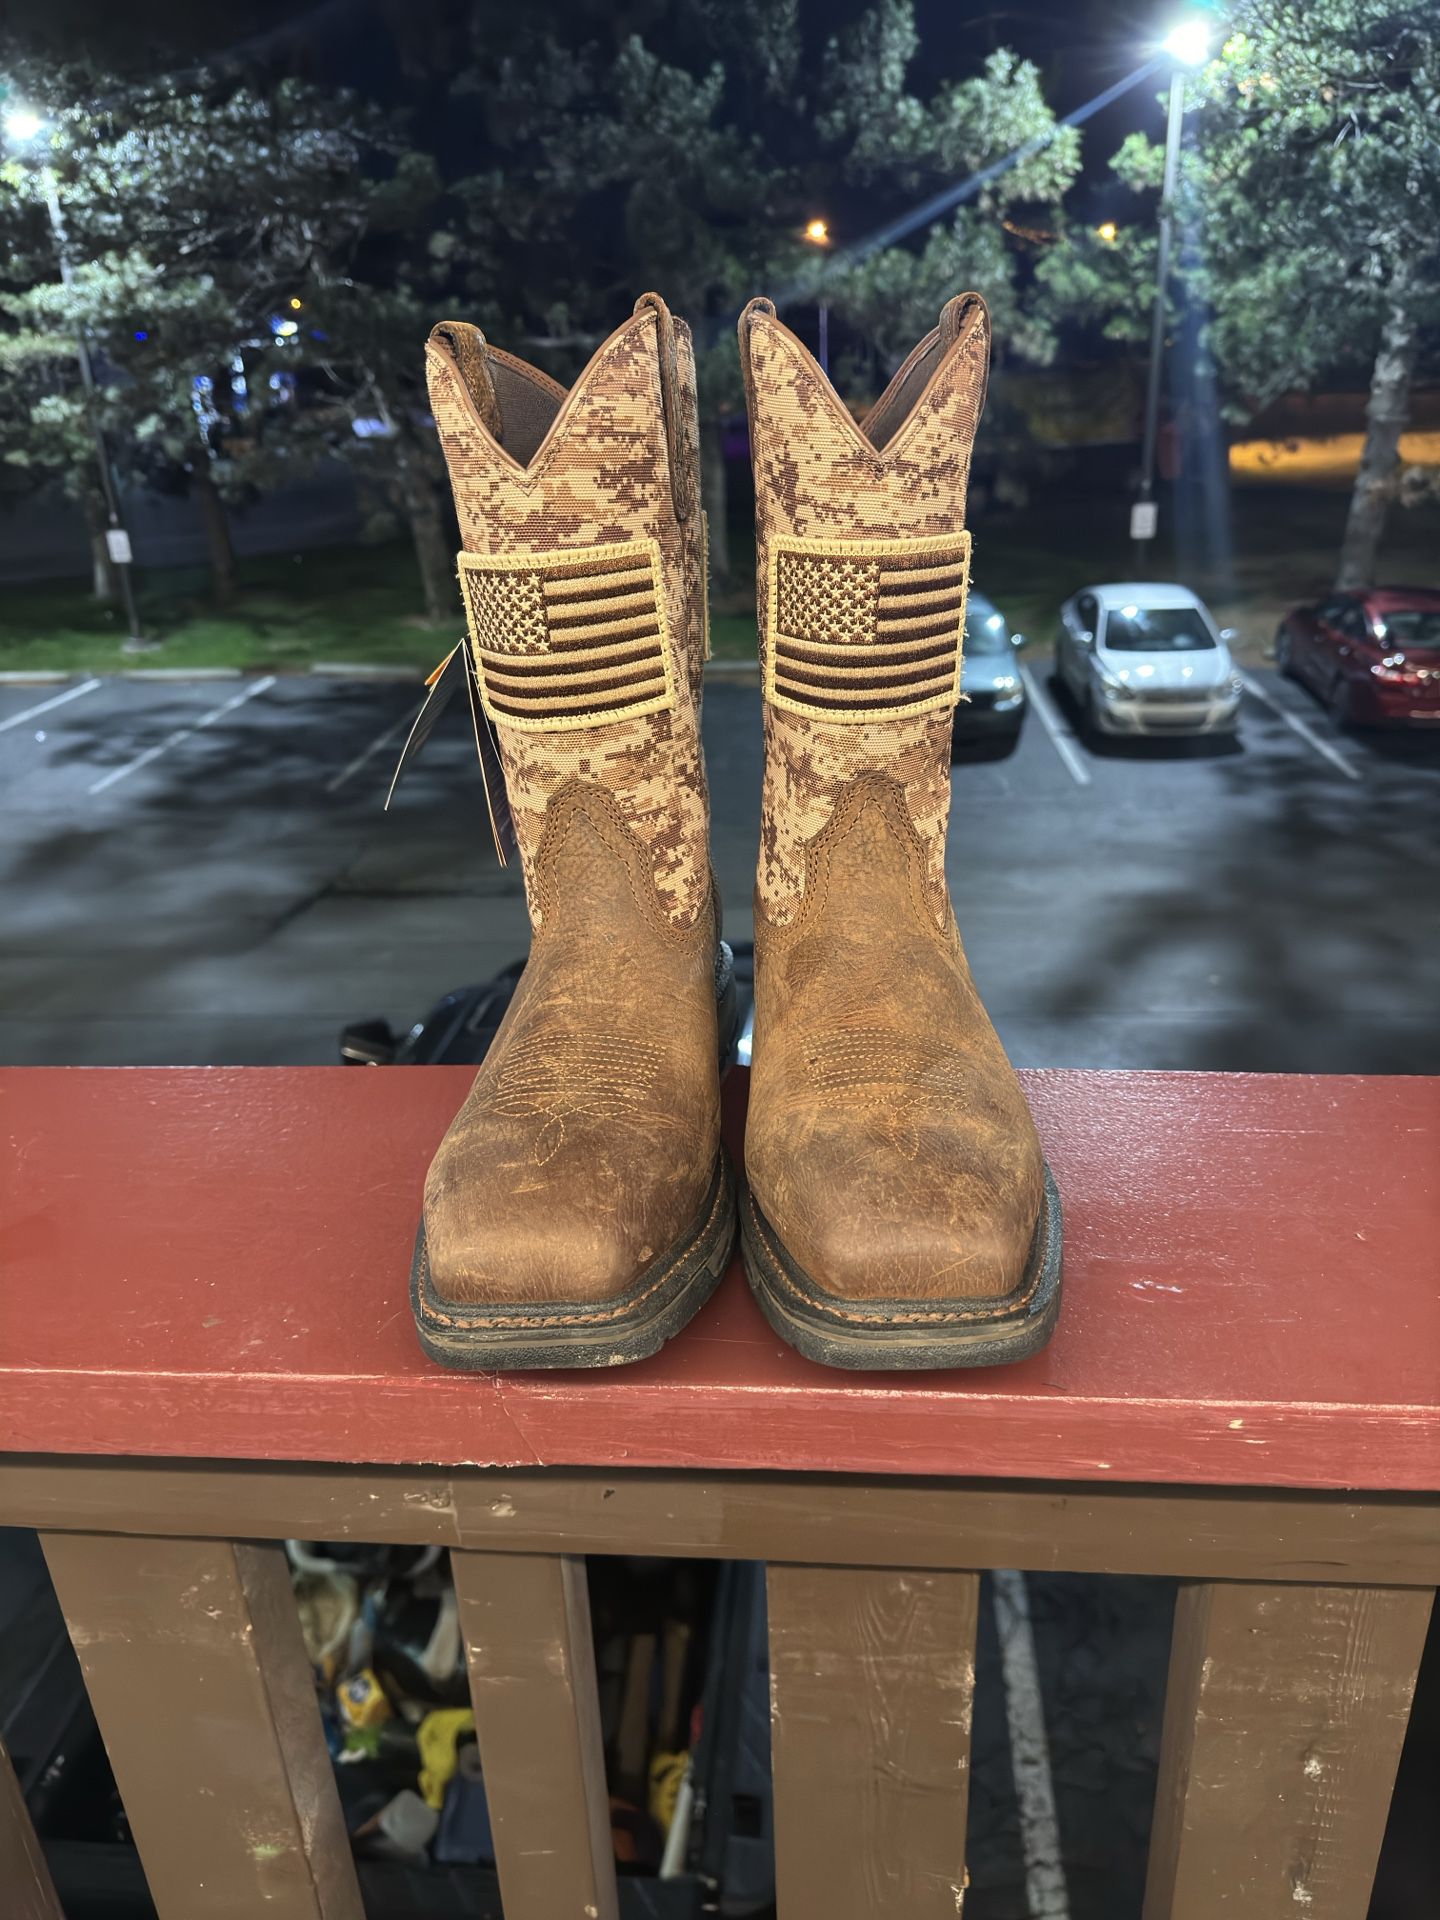 Ariat Steel Toe Work Boots